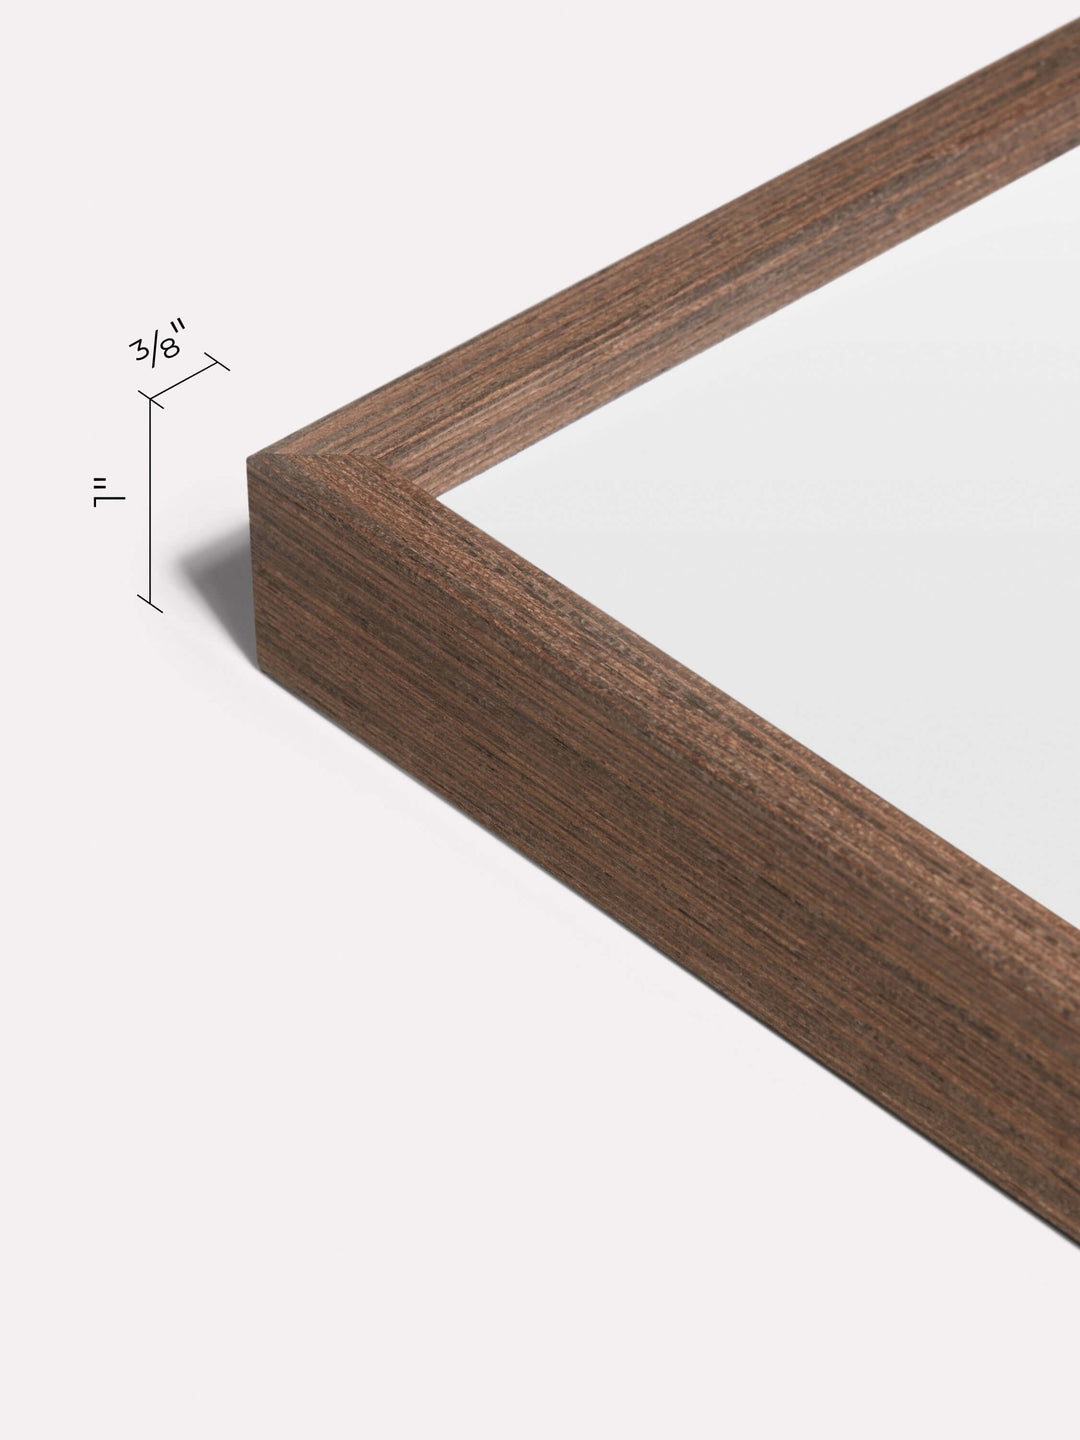 12x16-inch Thin Frame, Walnut - Close-up view